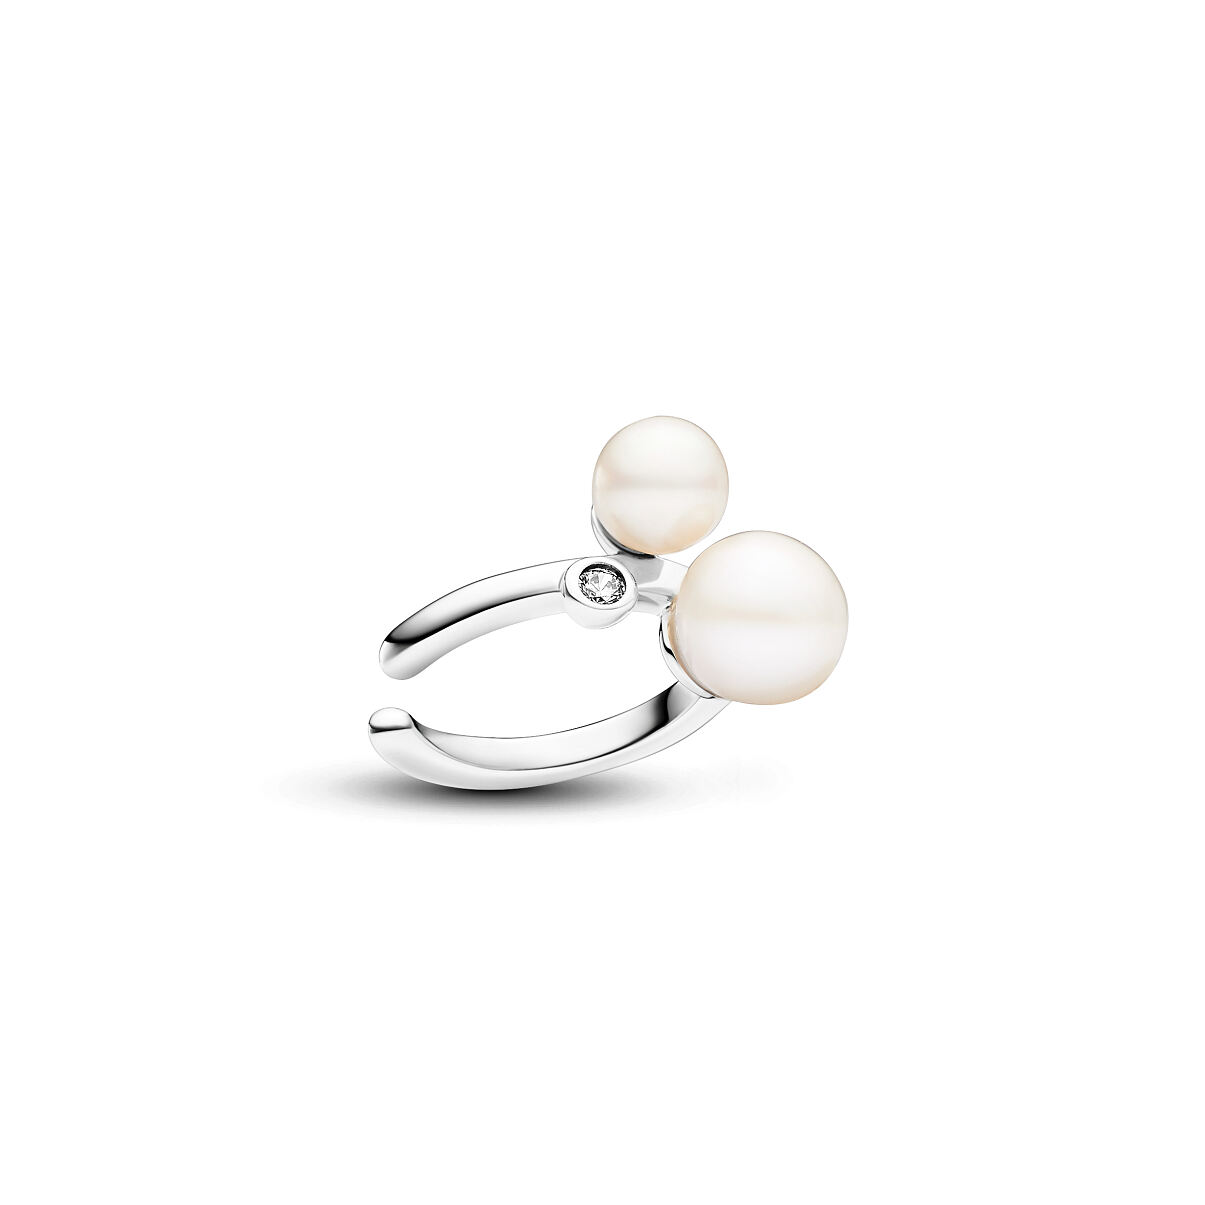 Pandora_Ear Cuff_Sterling Silver_Freshwater Pearls_Cubic Zirconia_293151C01_59,00 Euro (2)